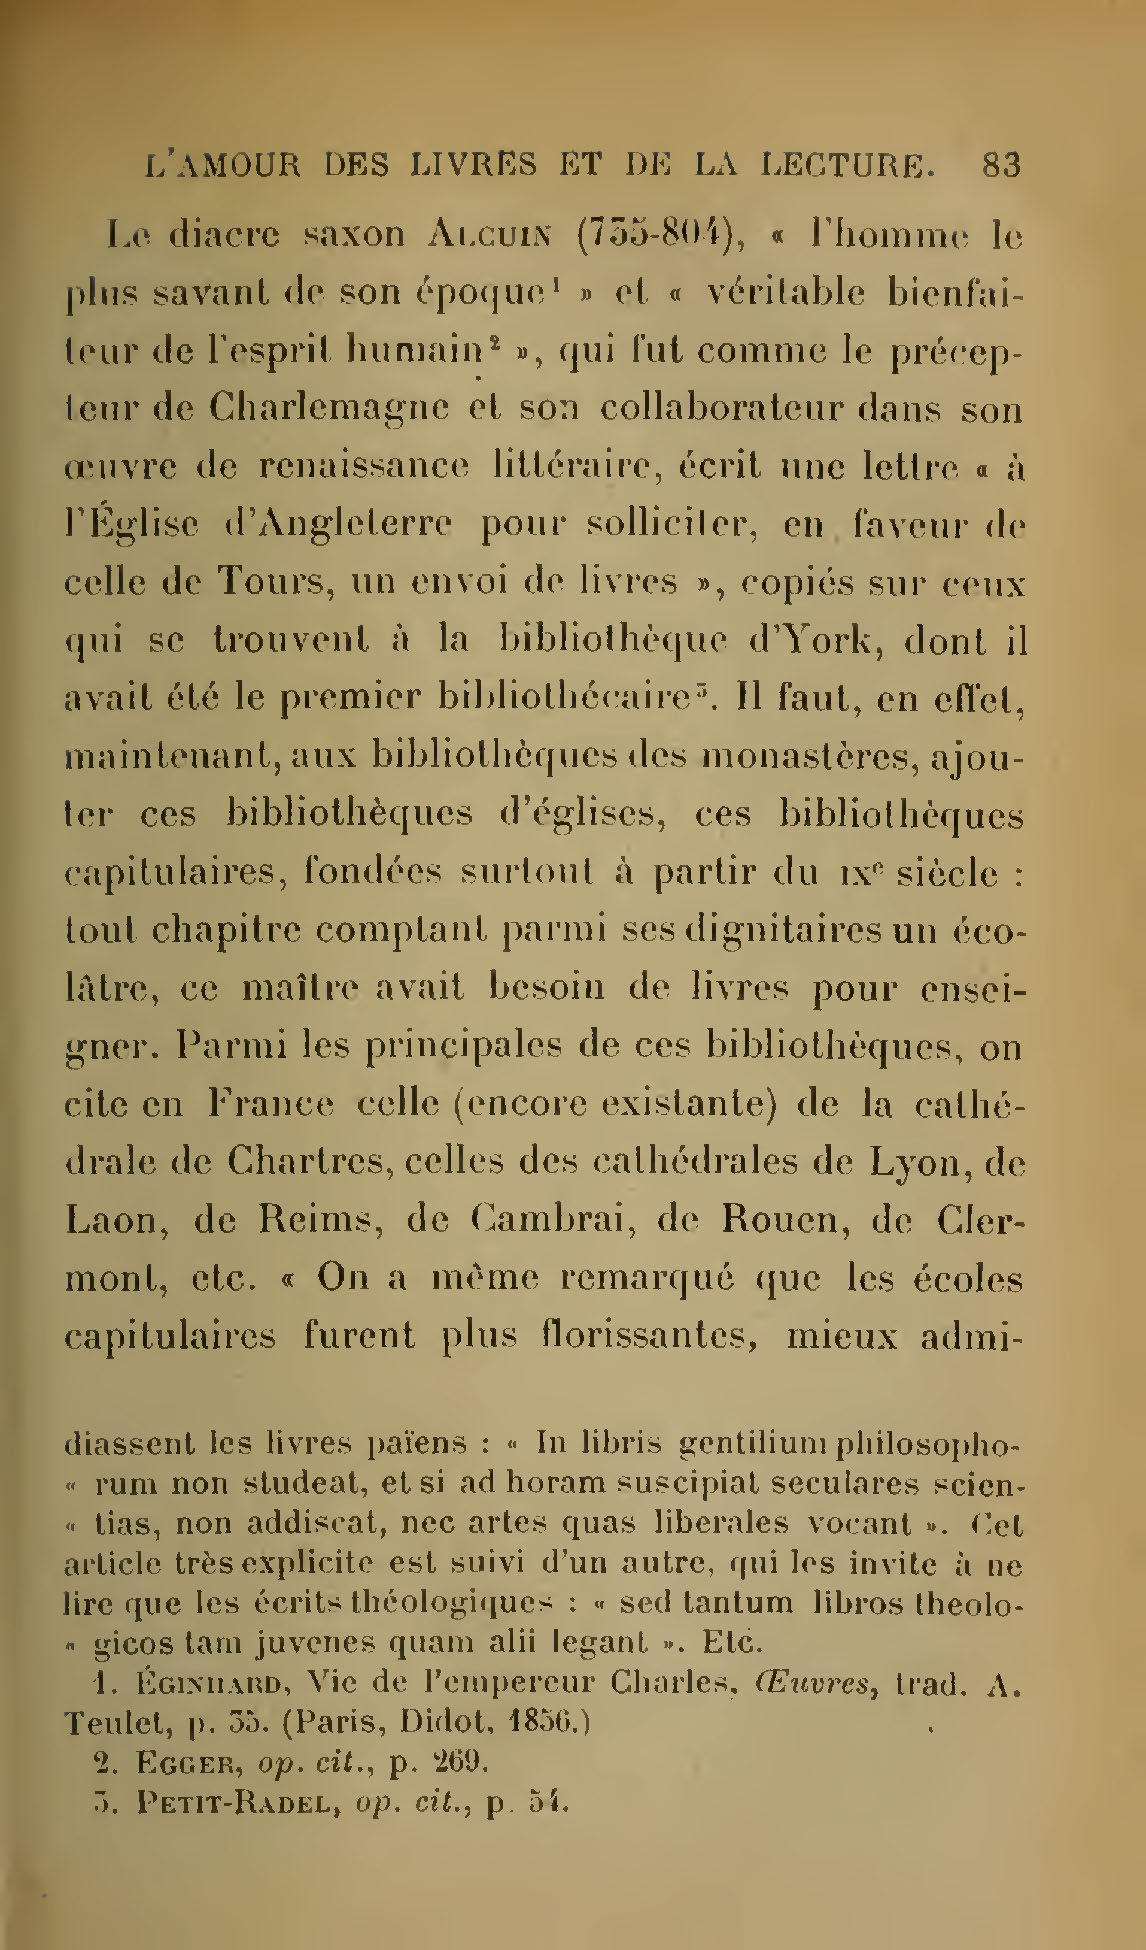 Albert Cim, Le Livre, t. I, p. 83.